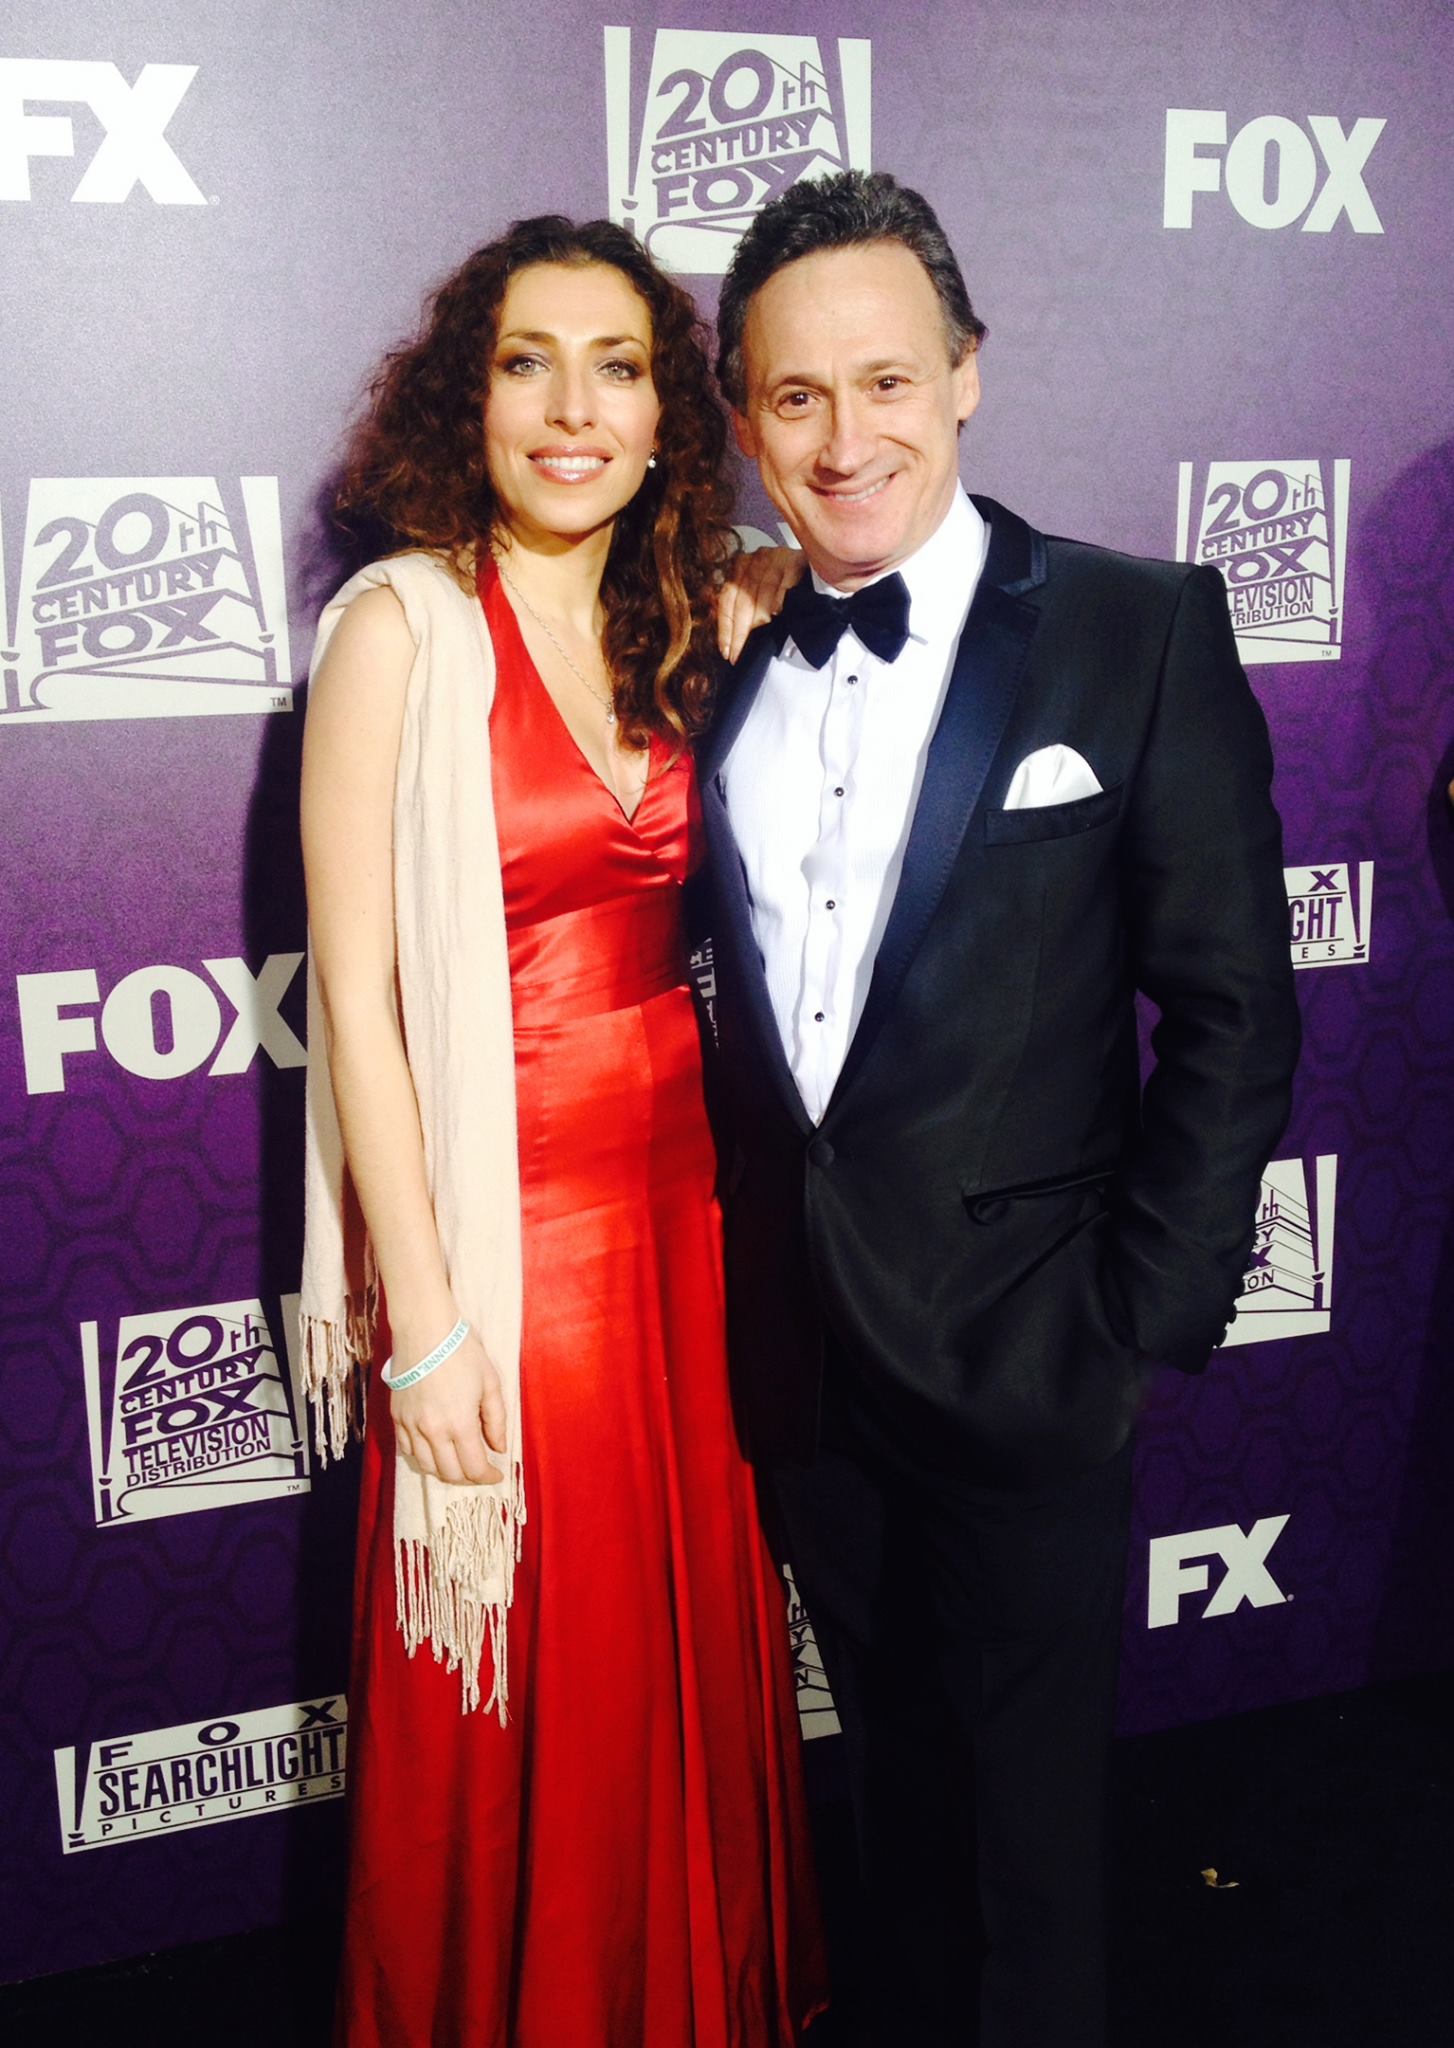 Golden Globes 2015 - Fox Party with Bernard Hiller Hollywood Acting Coach